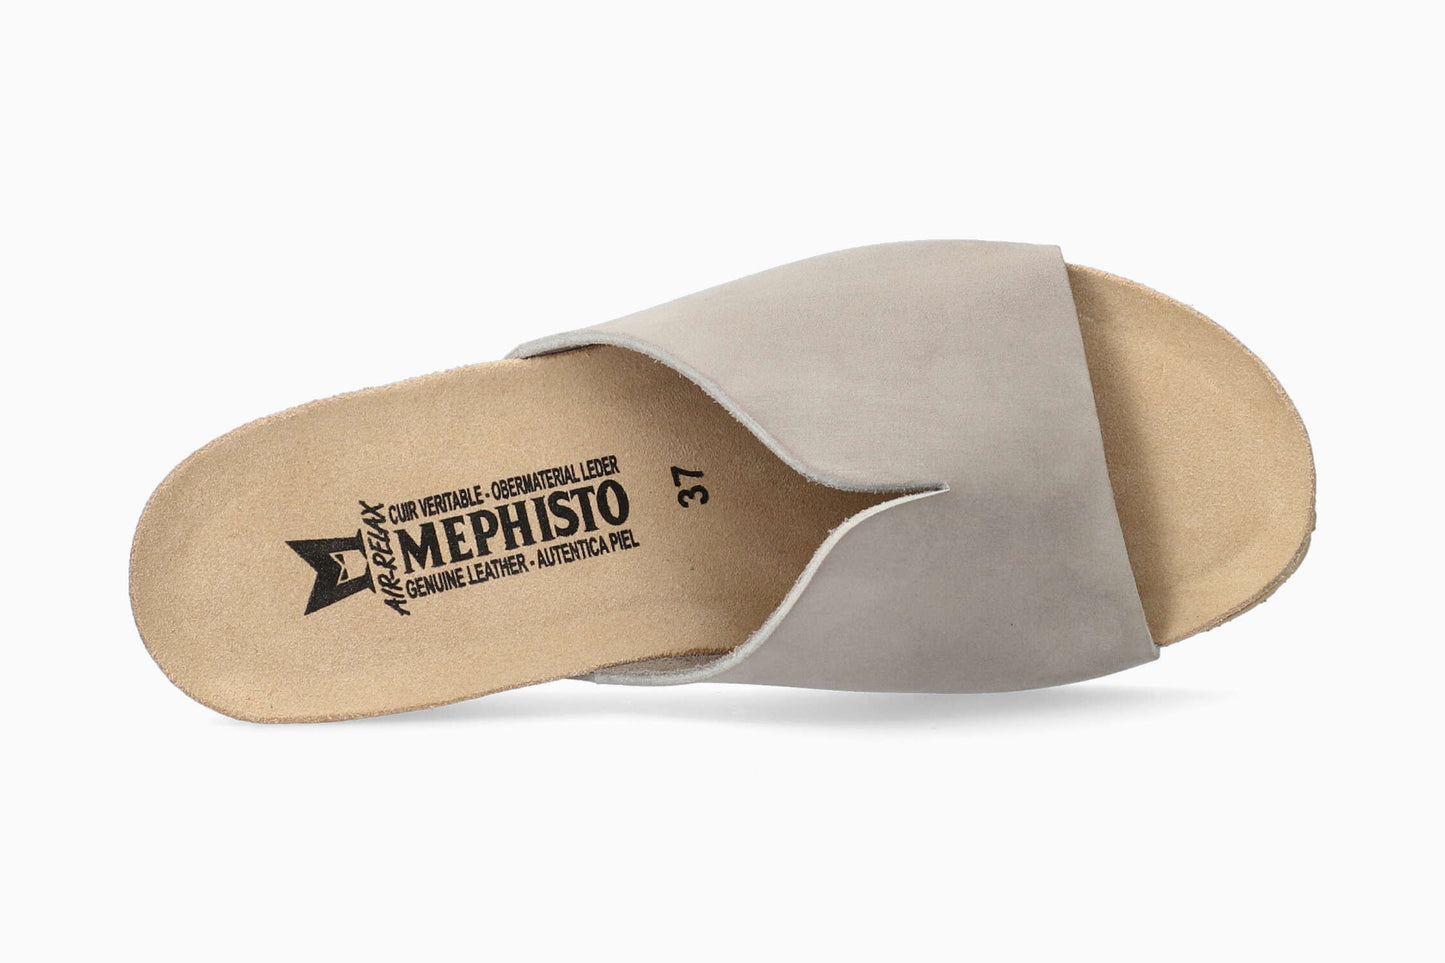 Lisane Mephisto Women's Sandals Light Grey Top